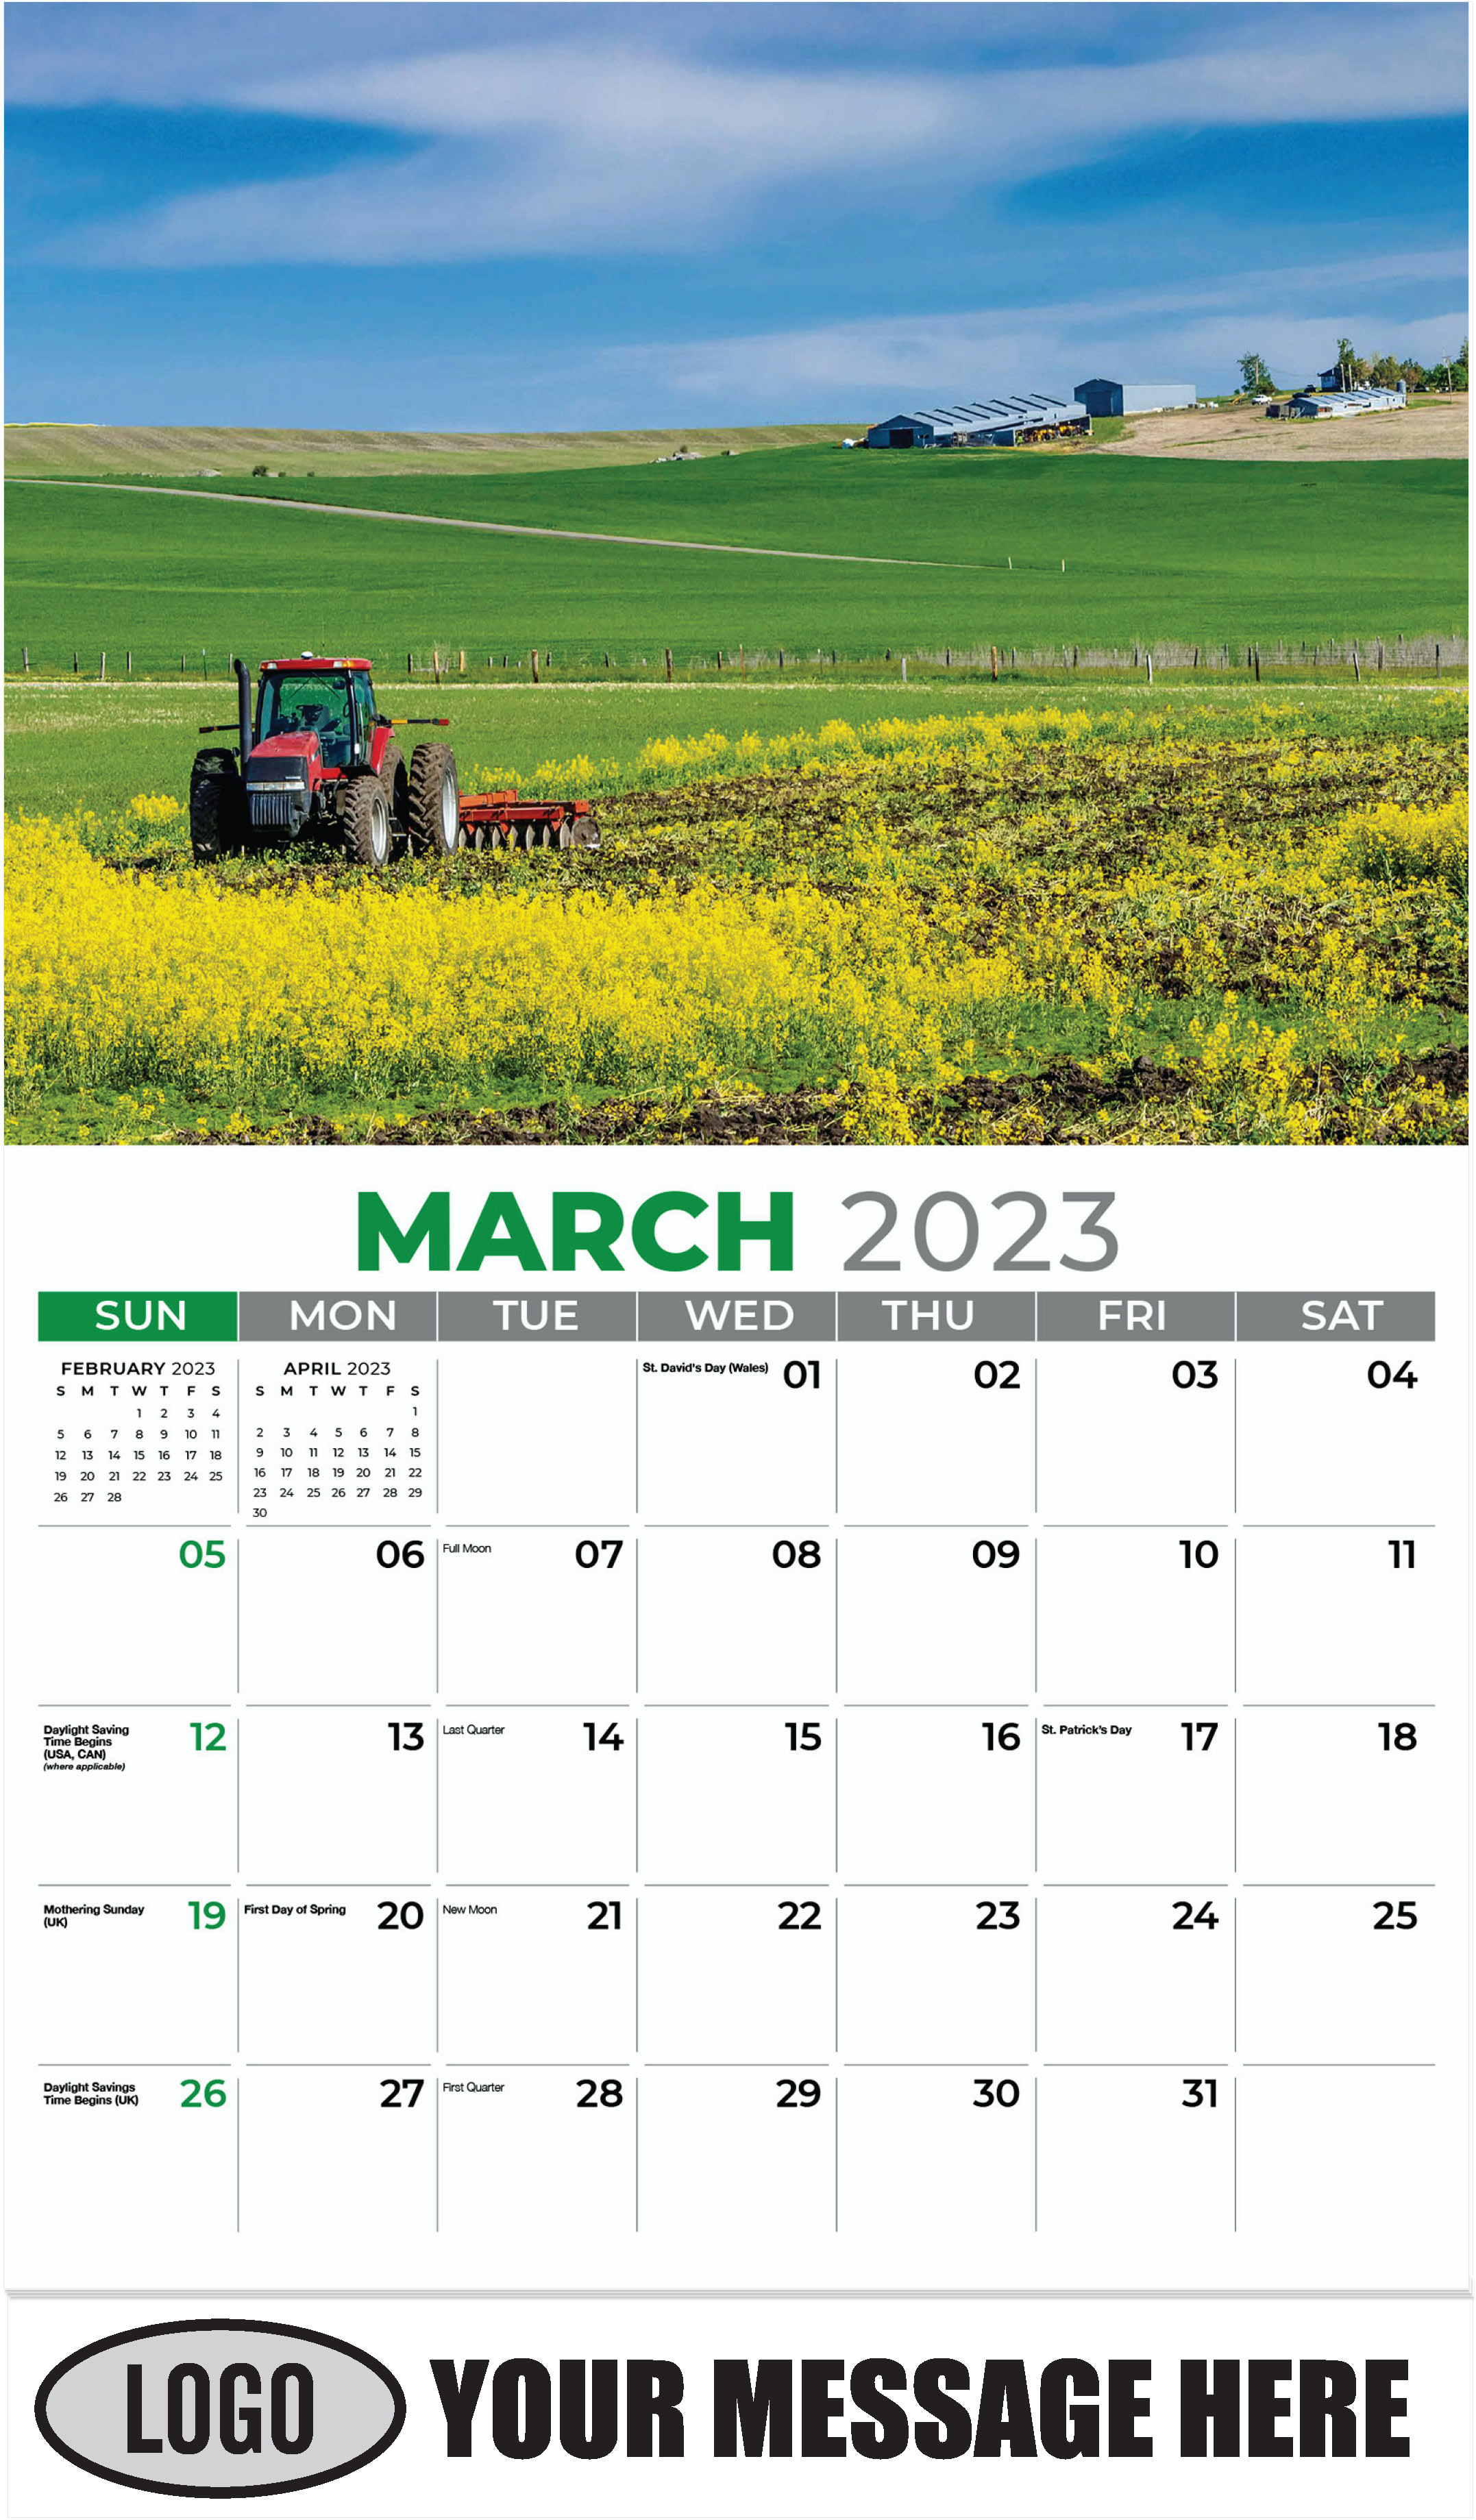 Grangeville, Idaho, USA - March - Country Spirit 2023 Promotional Calendar